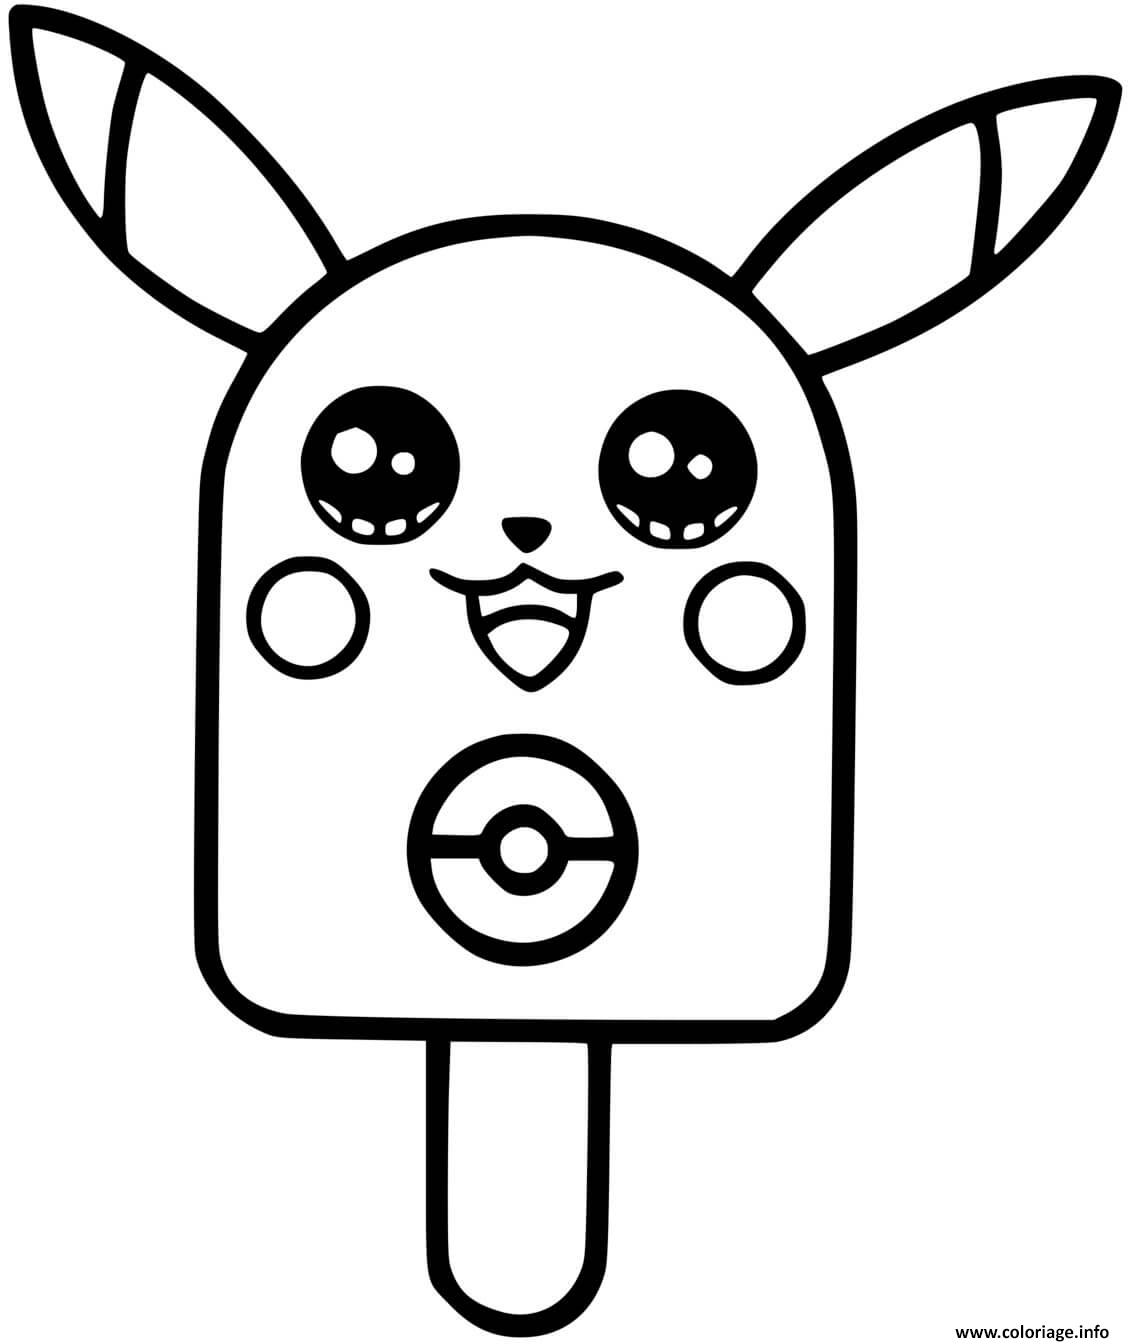 Dessin pikachu glace kawaii Coloriage Gratuit à Imprimer